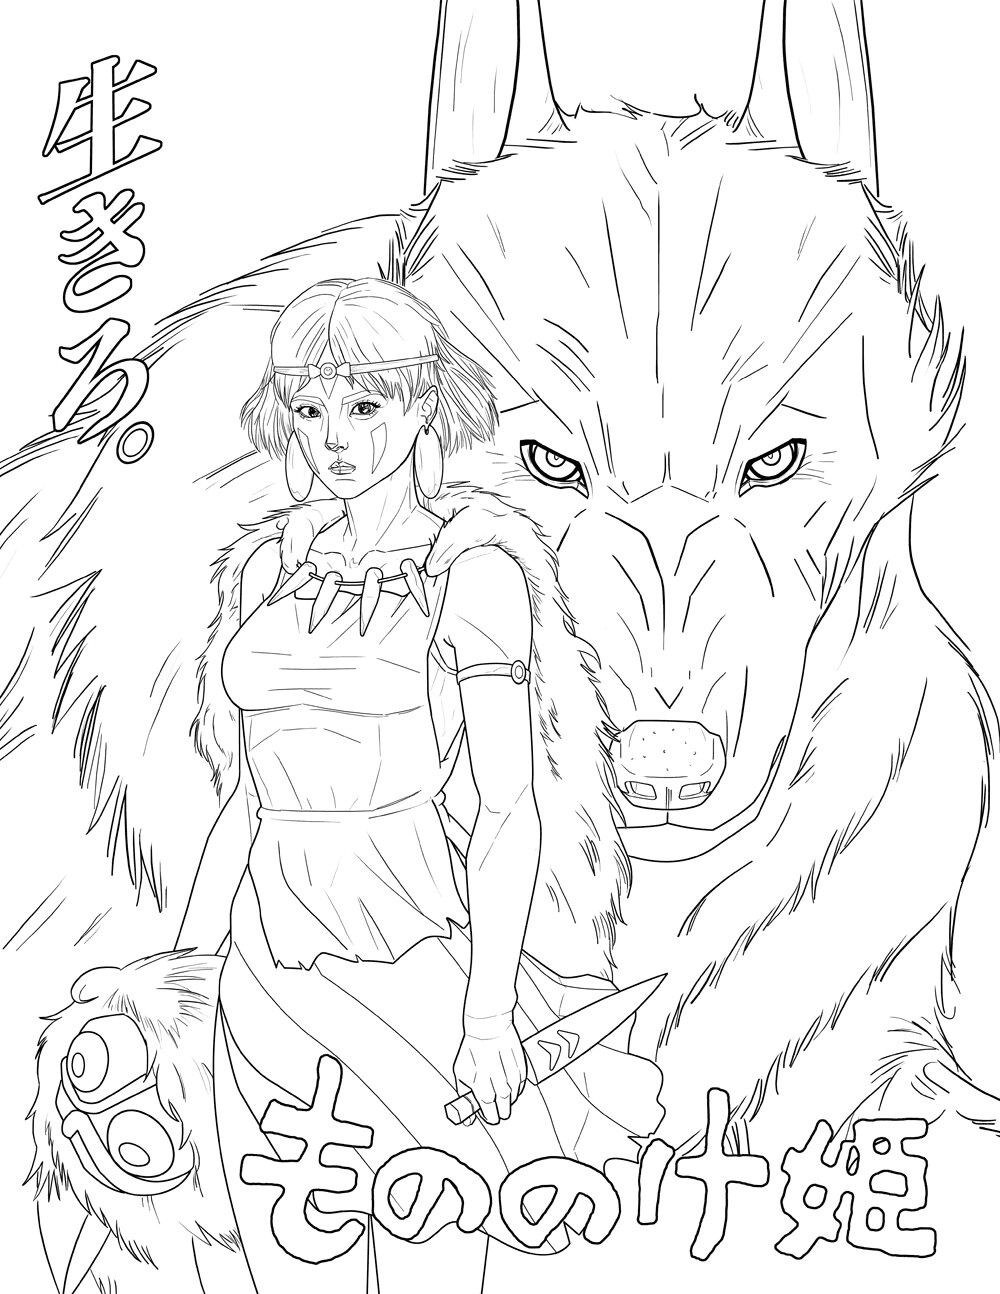 Desenho gratuito para colorir da princesa Mononoke para imprimir